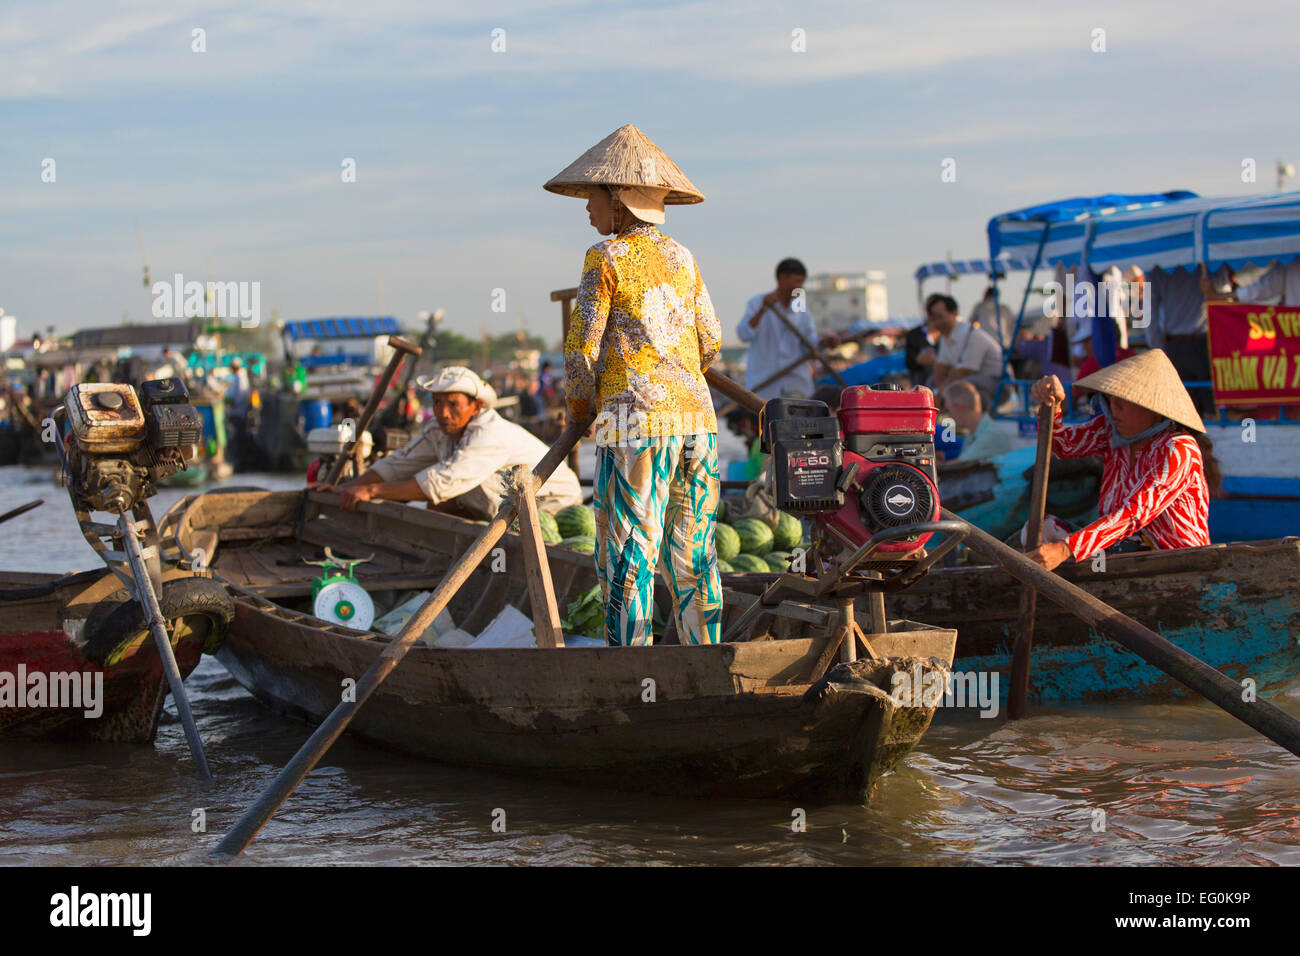 Cai Rang mercato galleggiante, Can Tho, Delta del Mekong, Vietnam Foto Stock